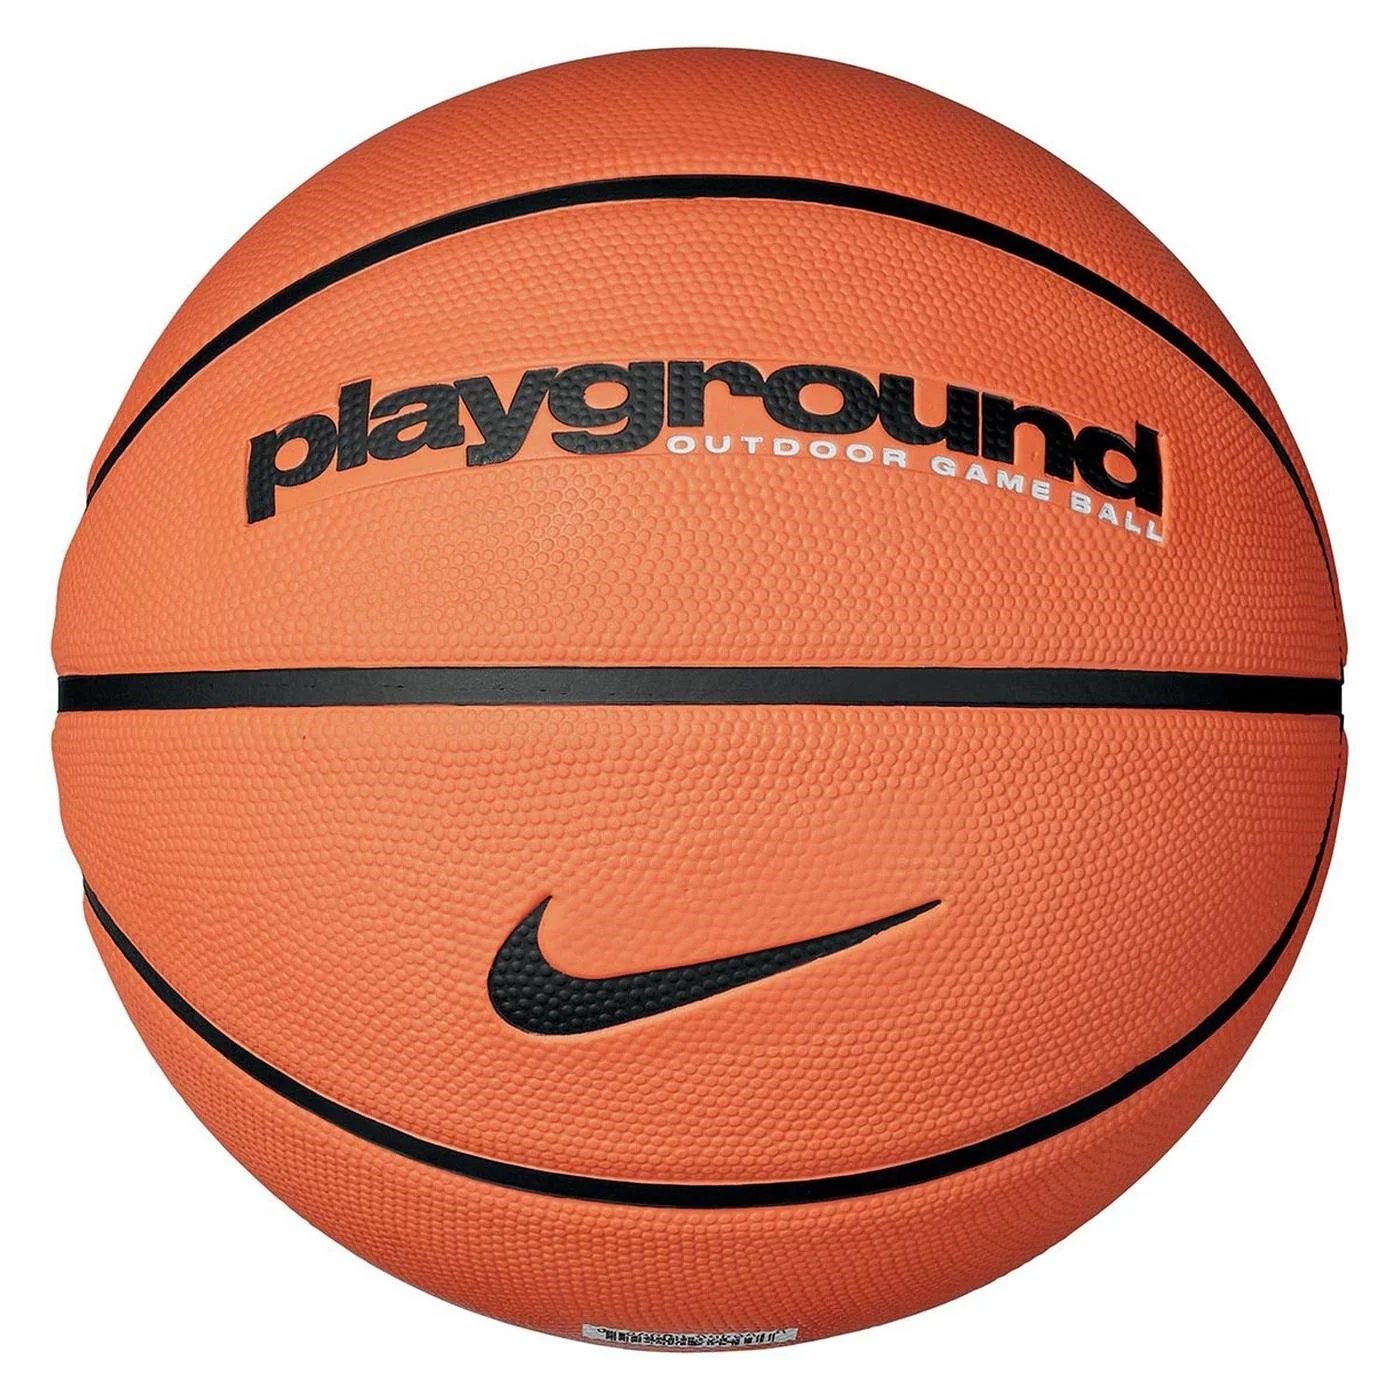 Nike Everyday Playground 8P Deflated Basketbol Topu Turuncu